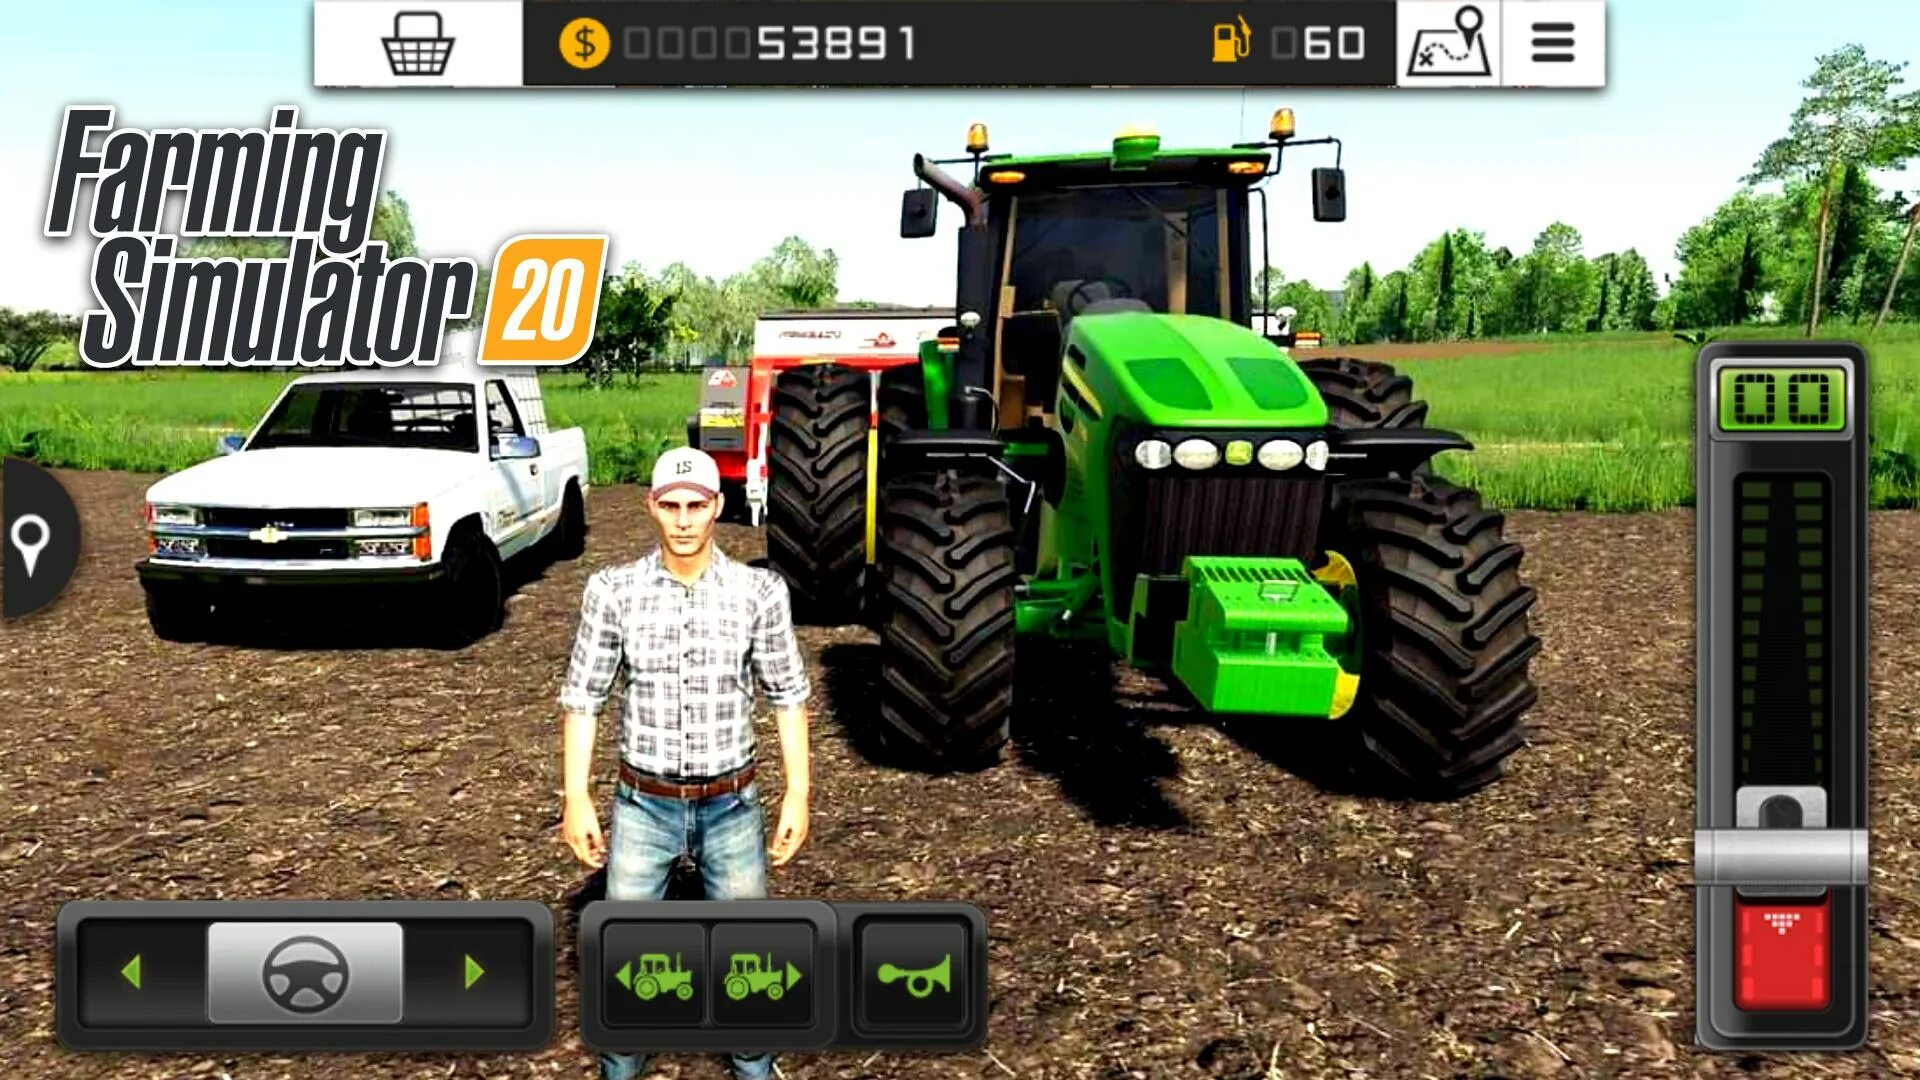 Фермер симулятор 20. Ферма симулятор 2020. Симулятор тракториста 20. Farming Simulator 2020 mobile.